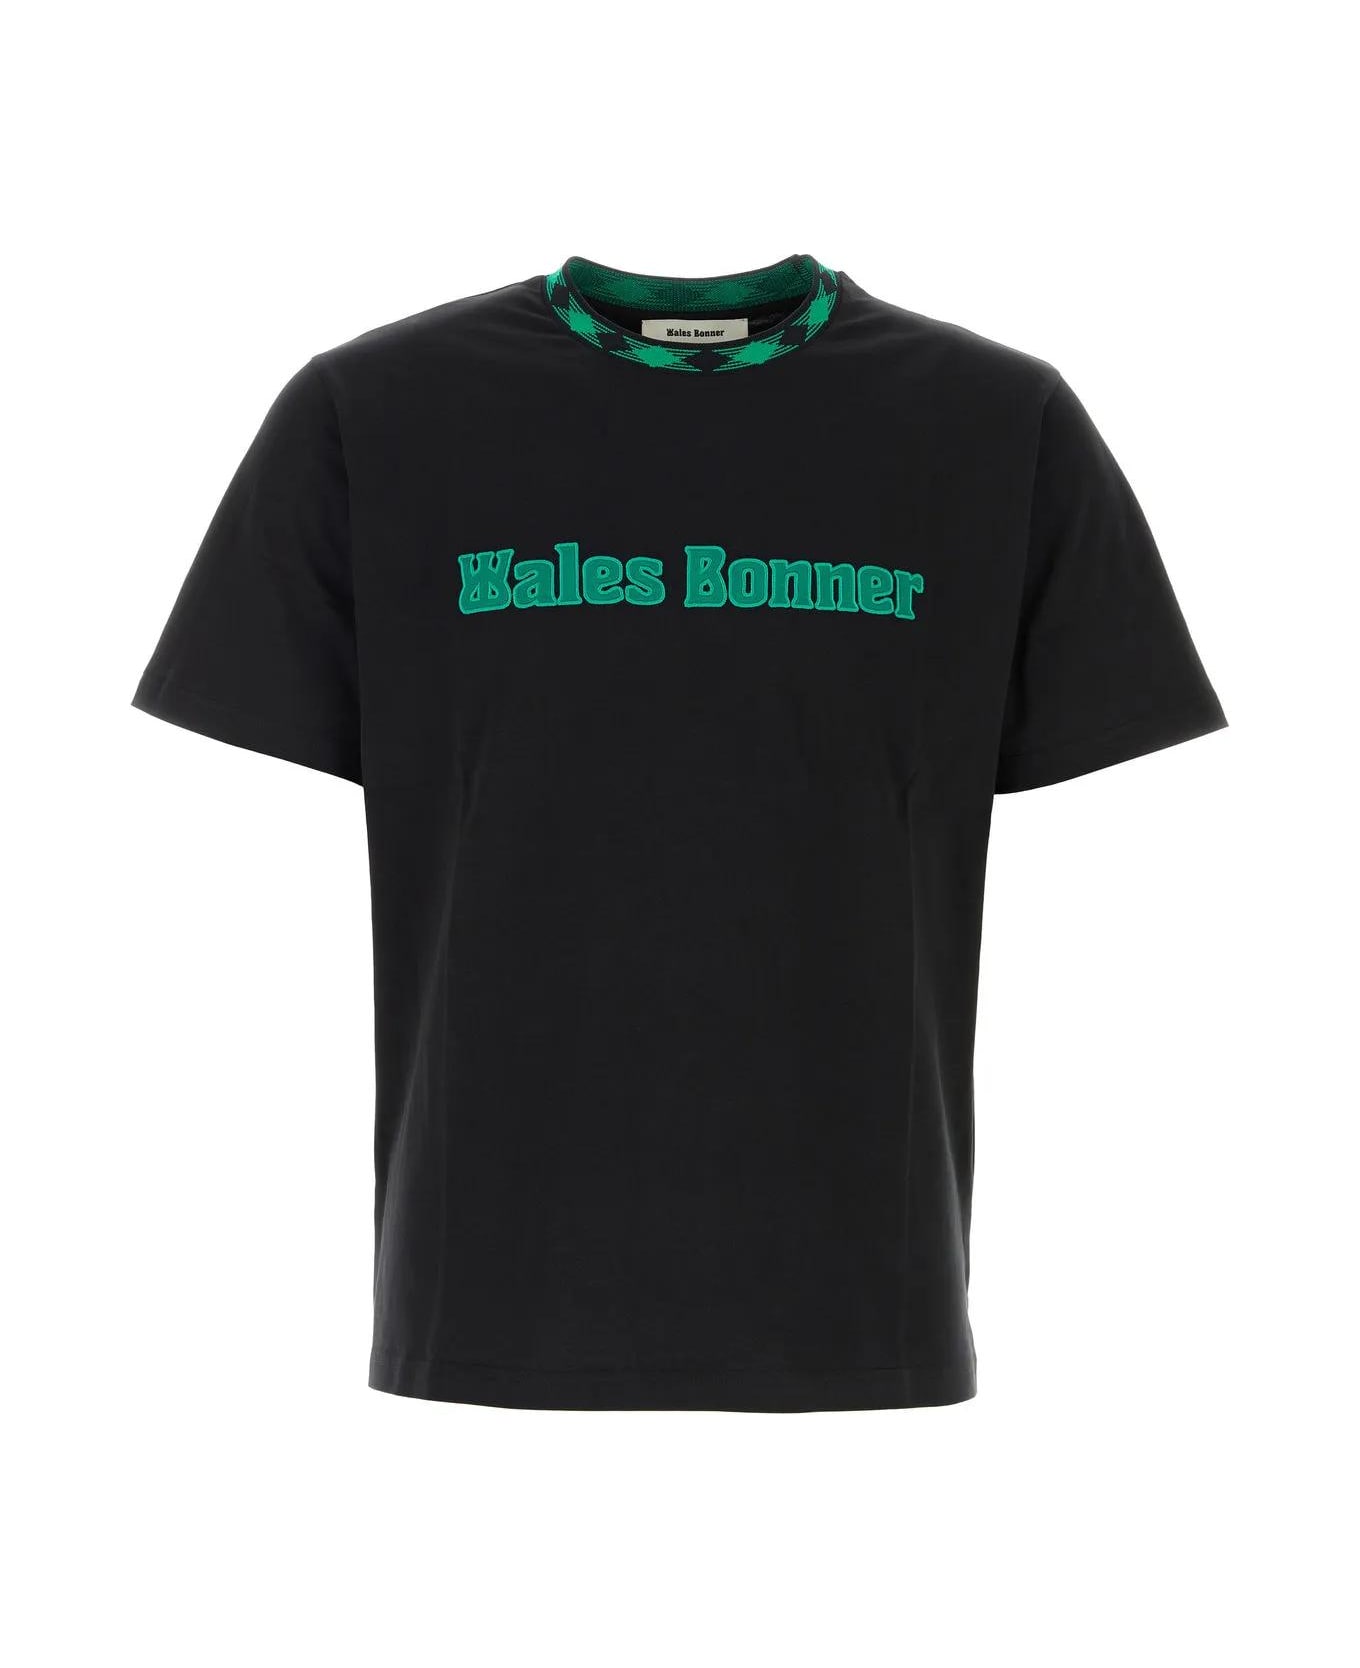 Wales Bonner Black Cotton Original T-shirt - Black シャツ